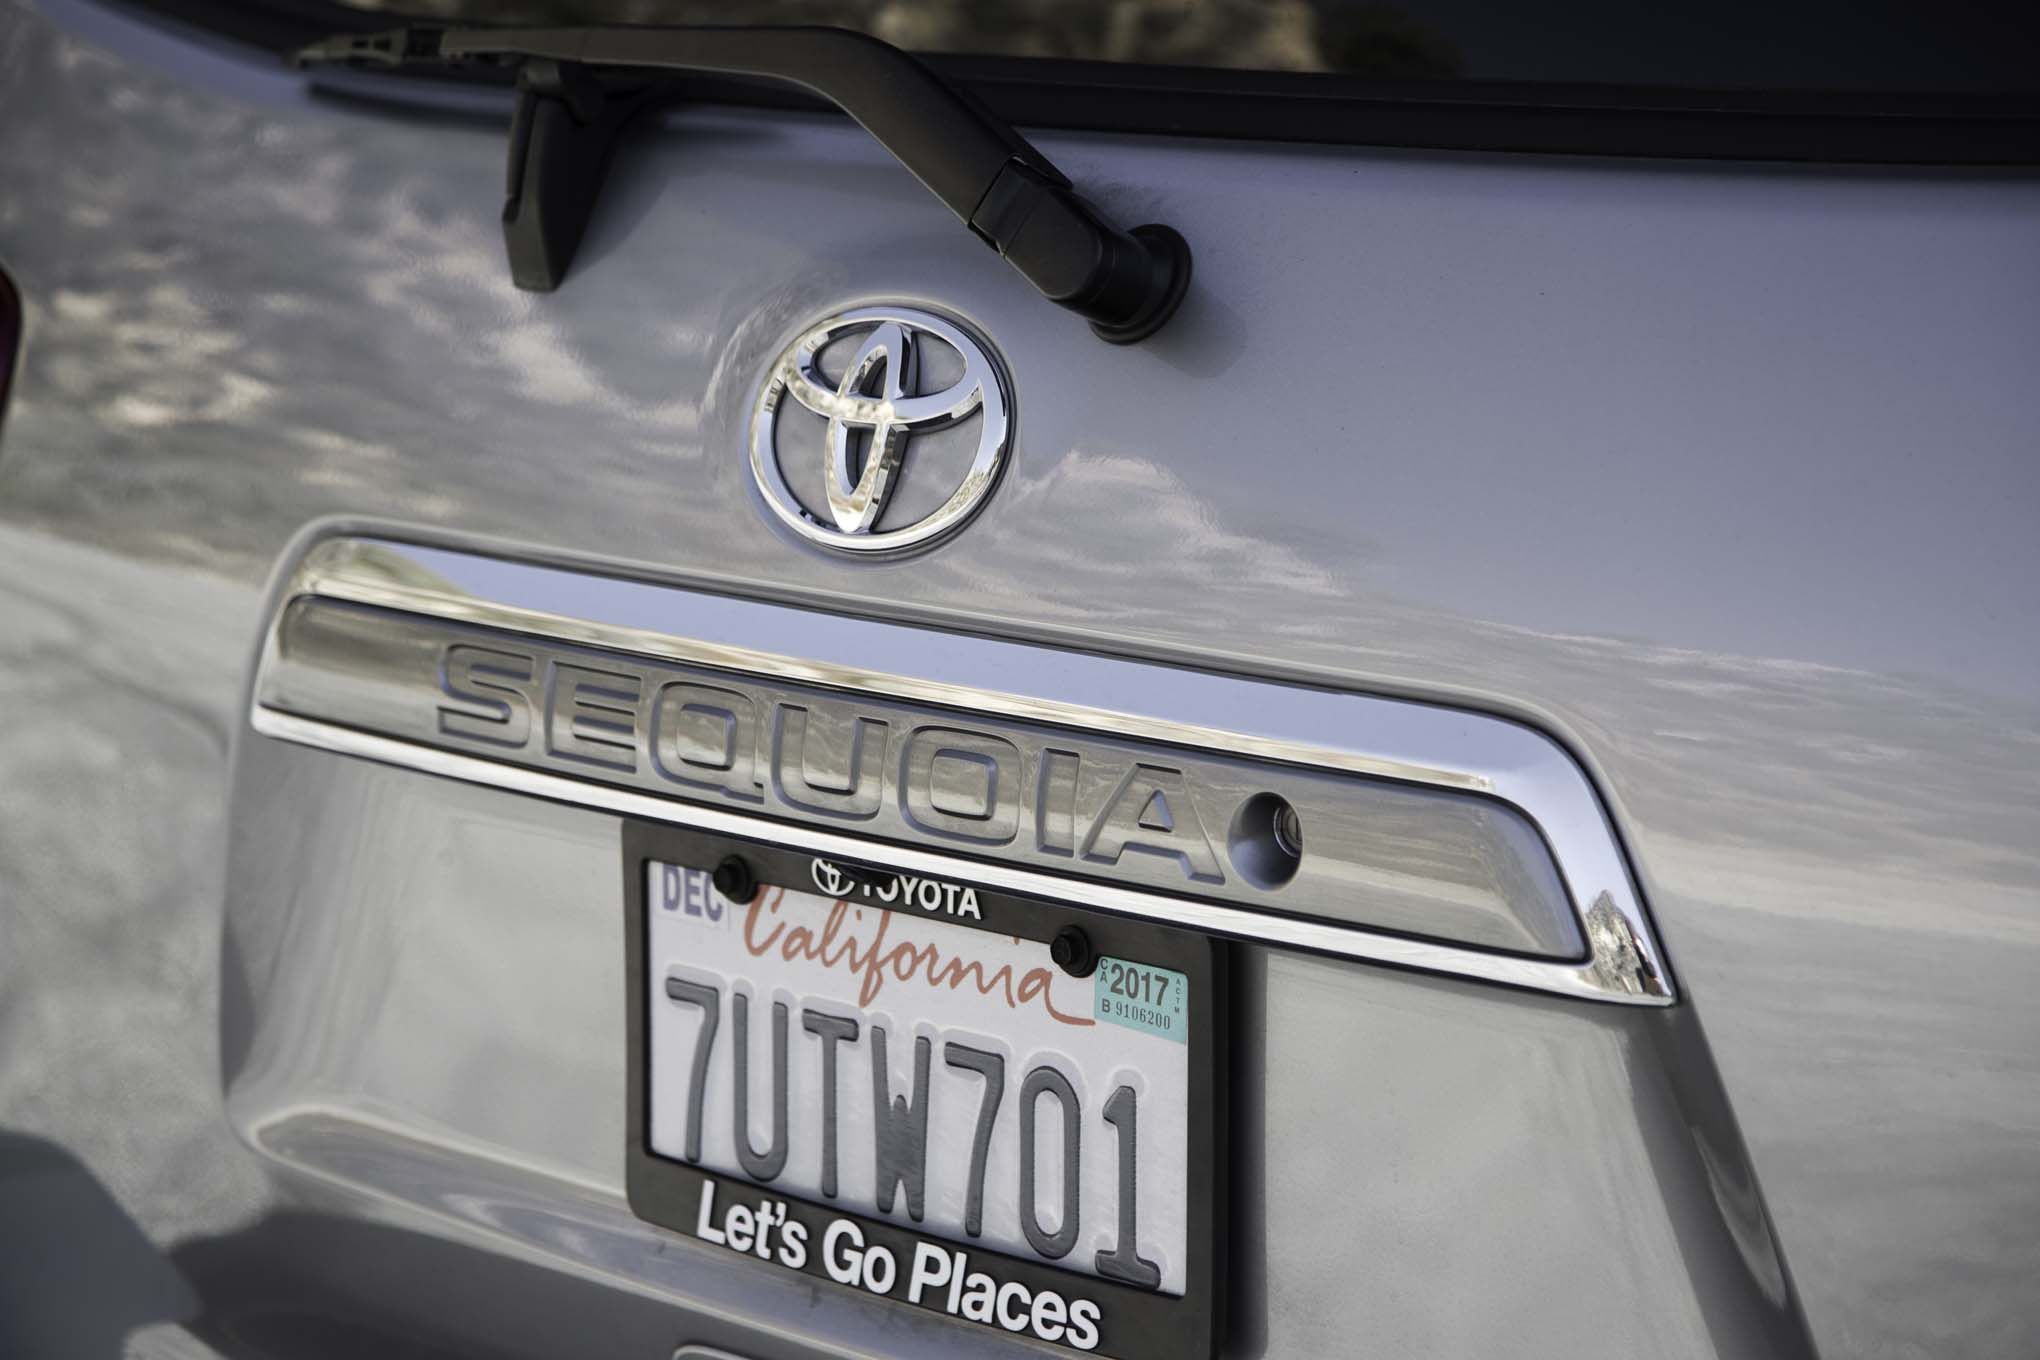 2017 Toyota Sequoia 4×4 Platinum Exterior View Rear Badge (View 11 of 26)